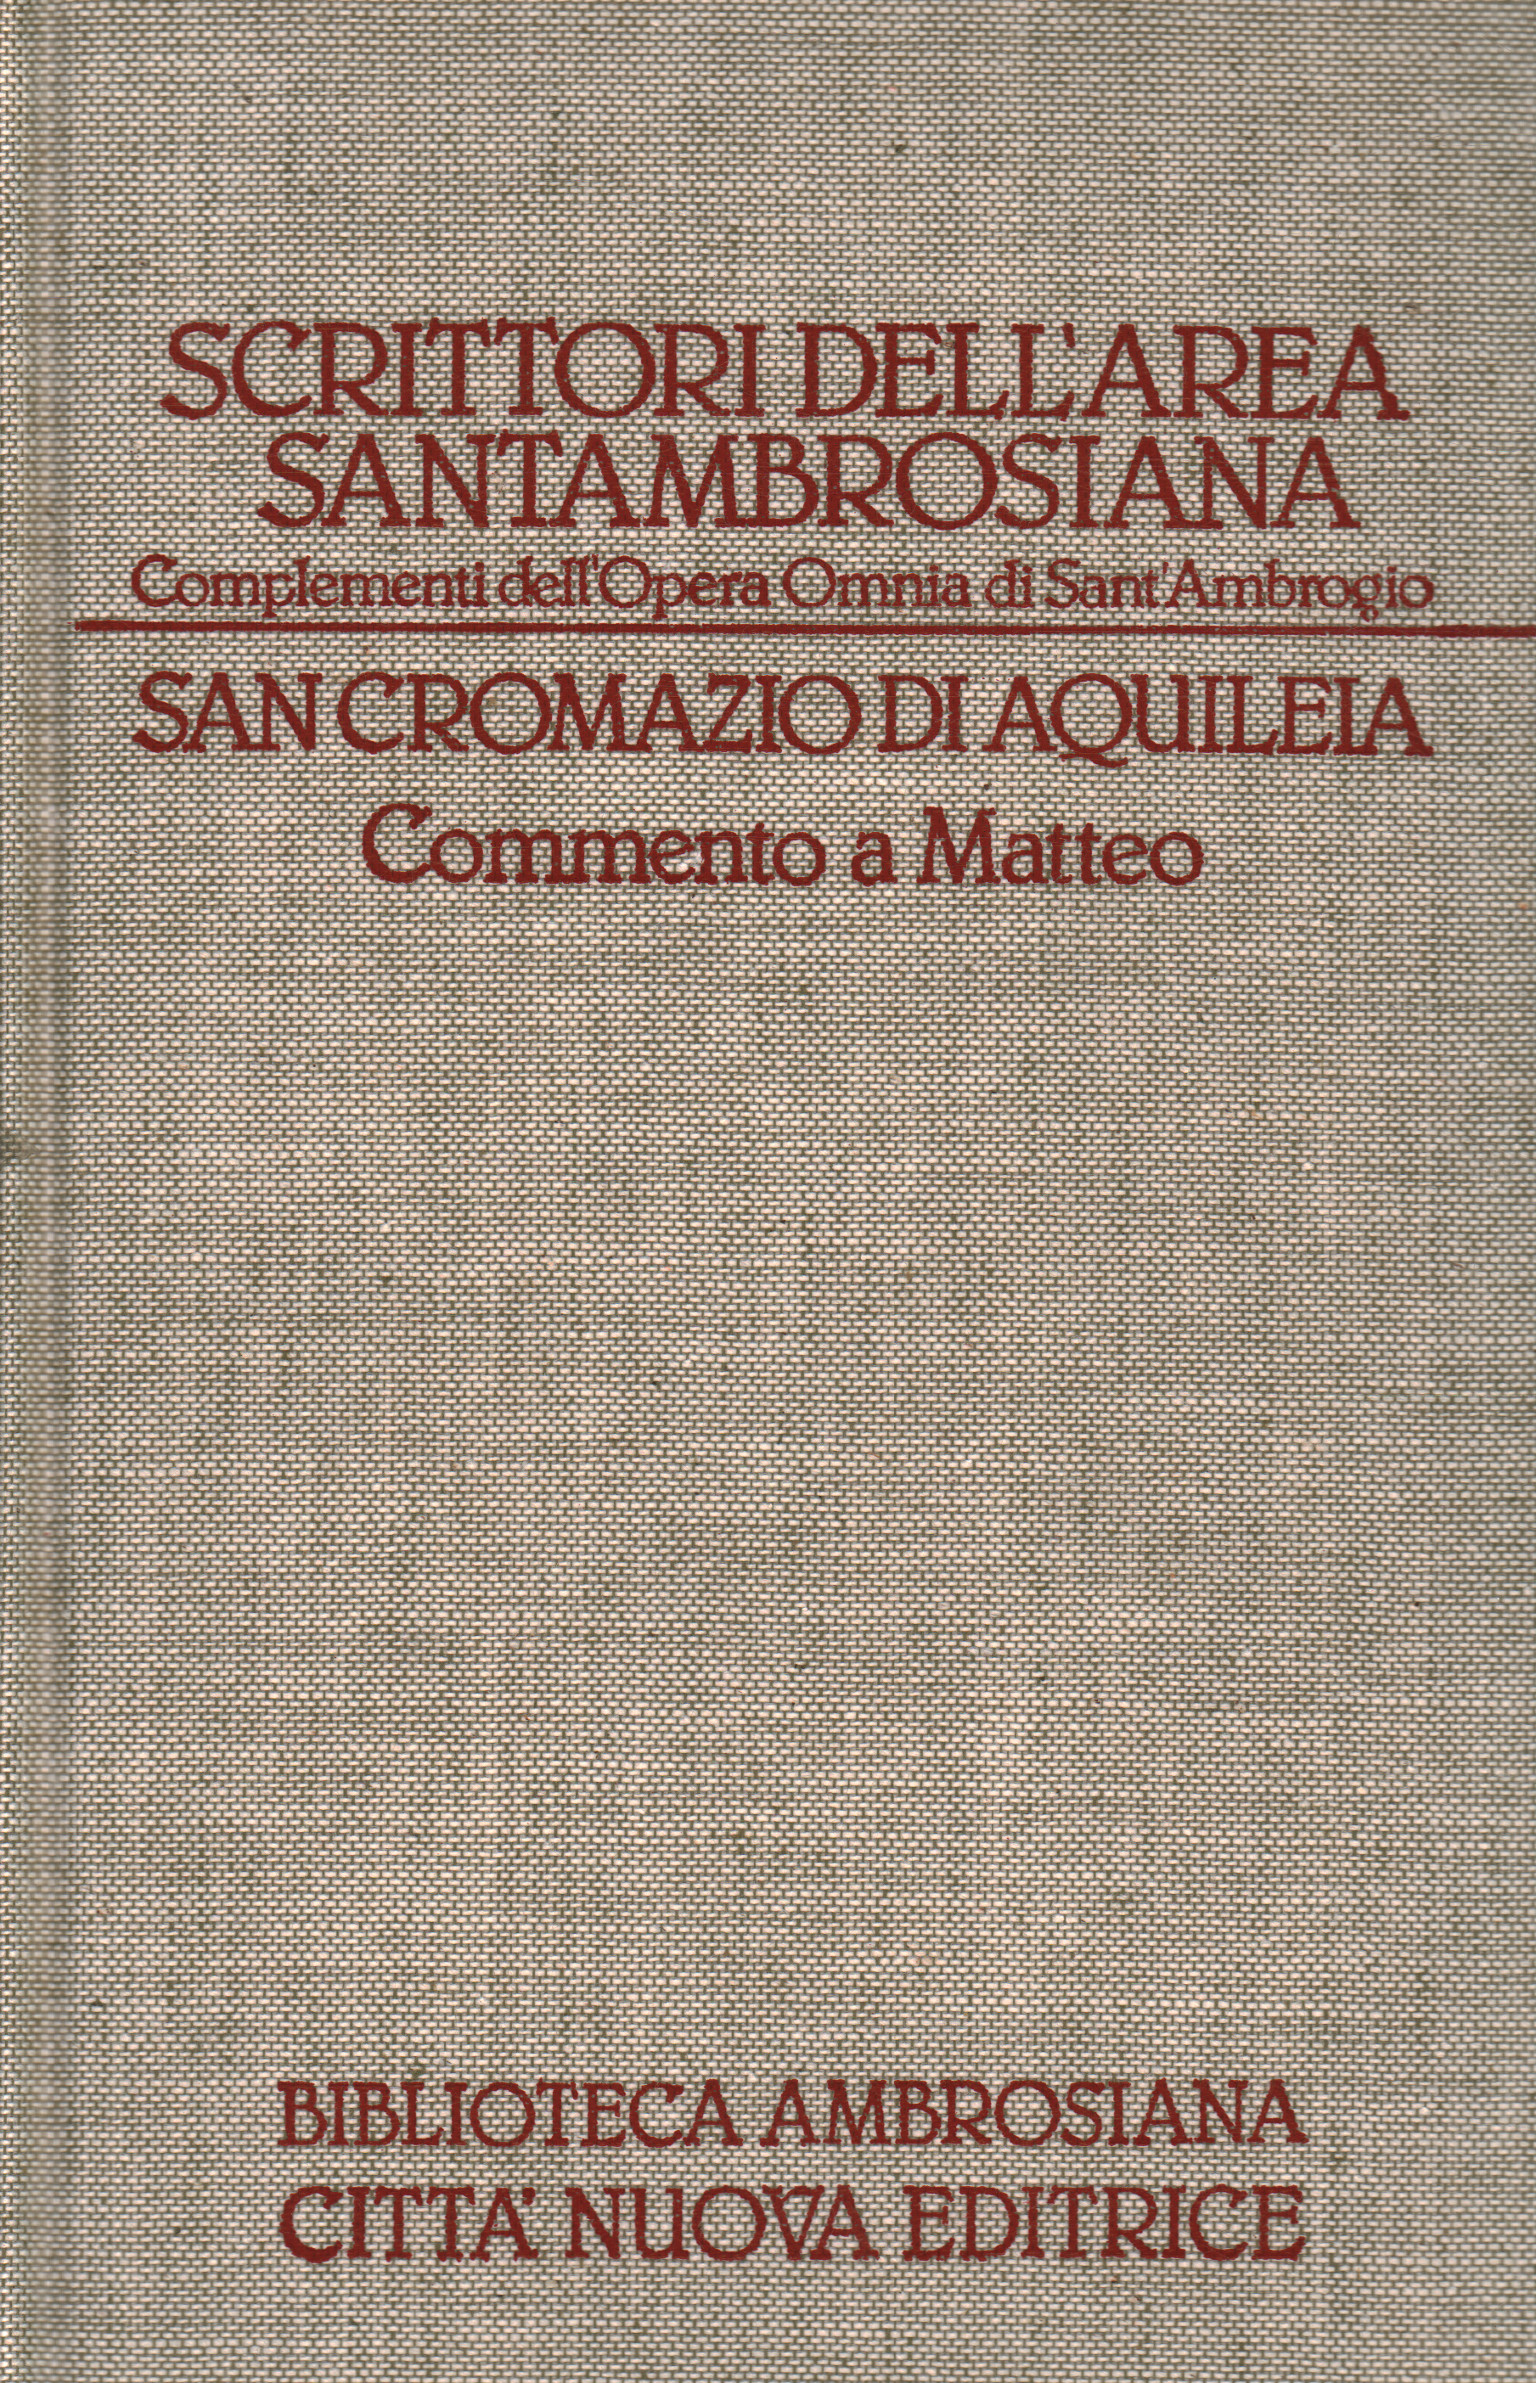 Writers of the Santambrosiana area., San Chromatius of Aquileia. Commentary to M